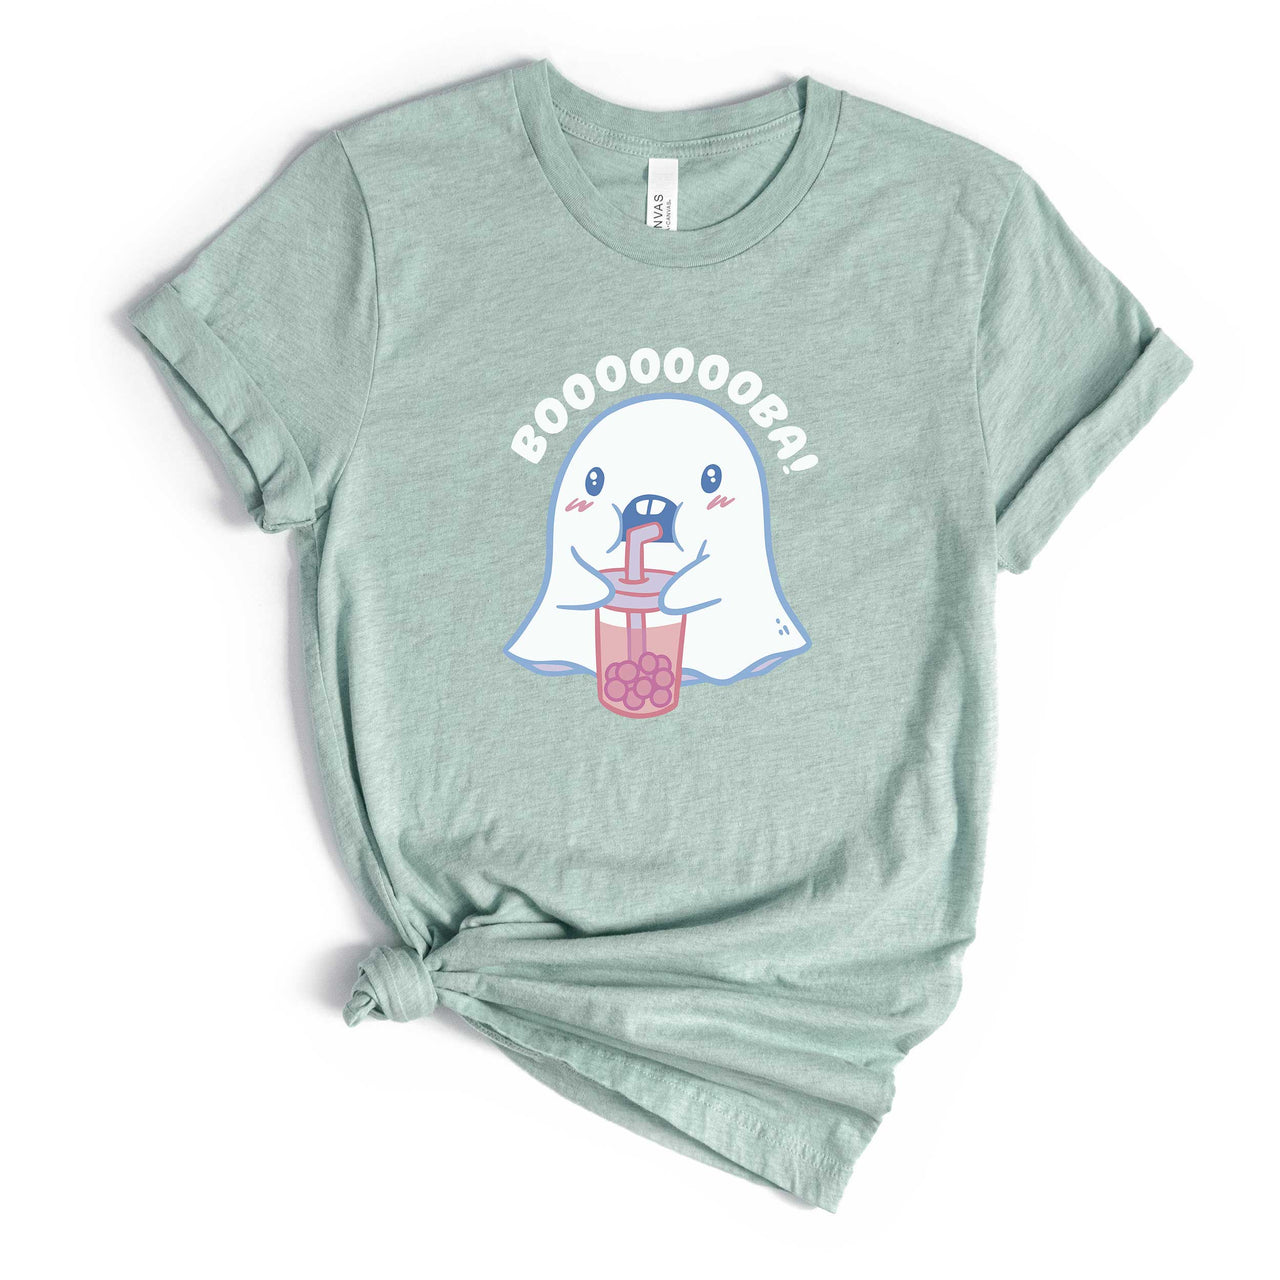 Boooba Boba Tea Ghost T-Shirt